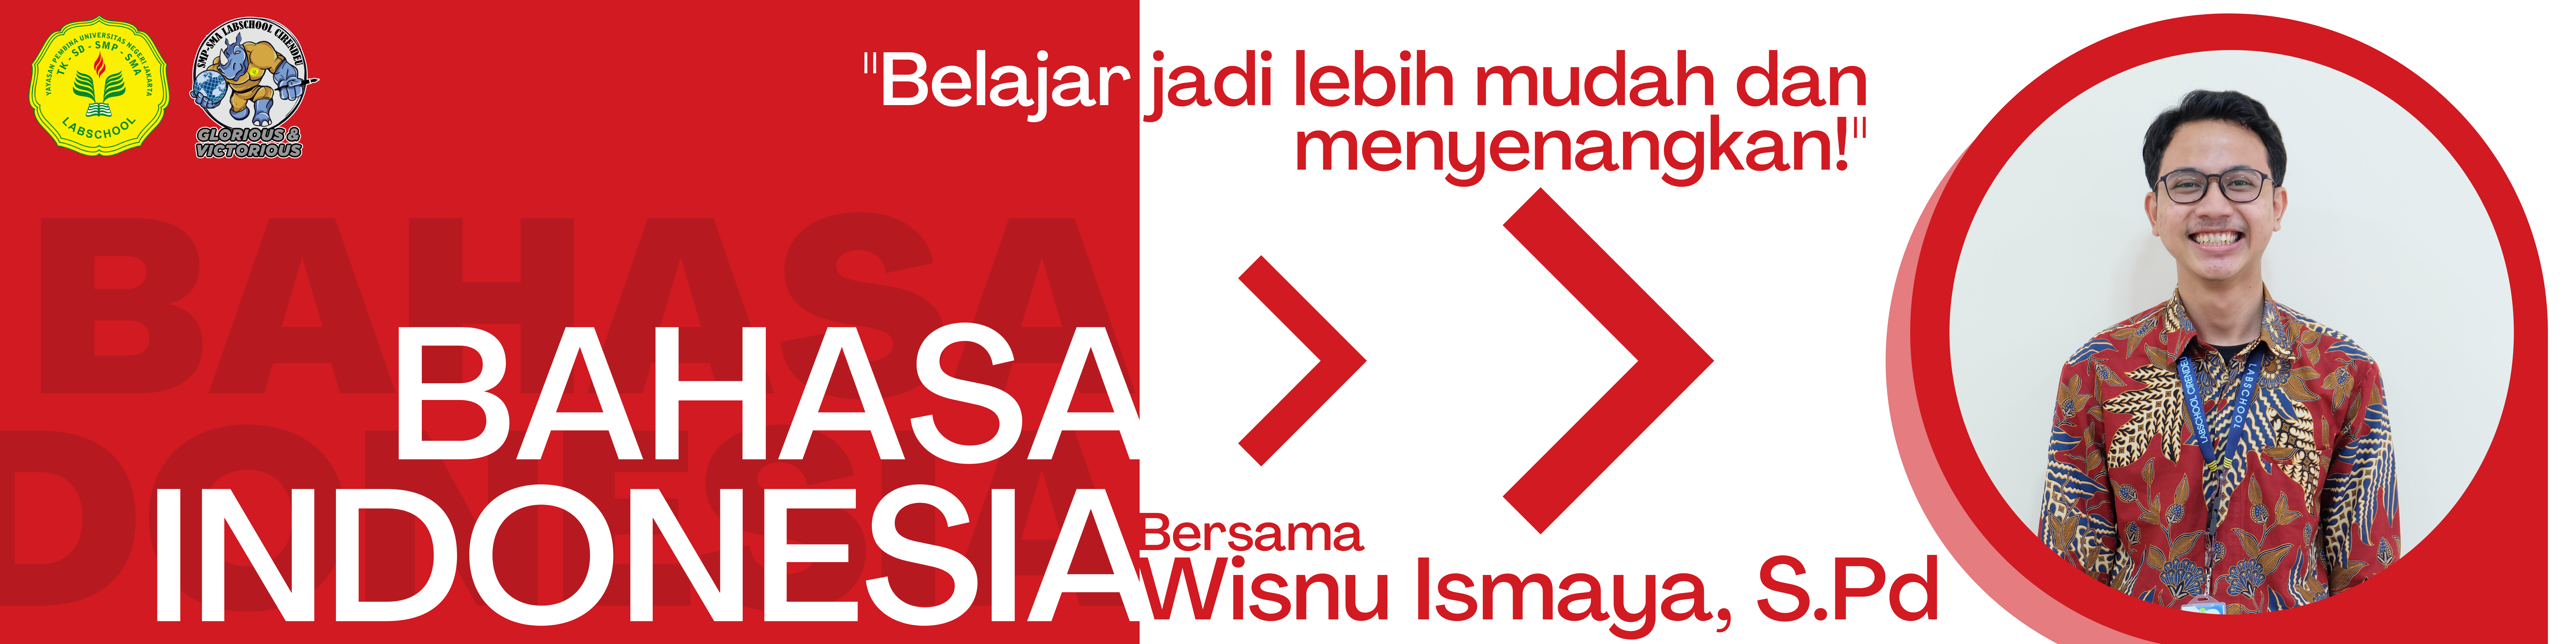 Bahasa Indonesia [01]